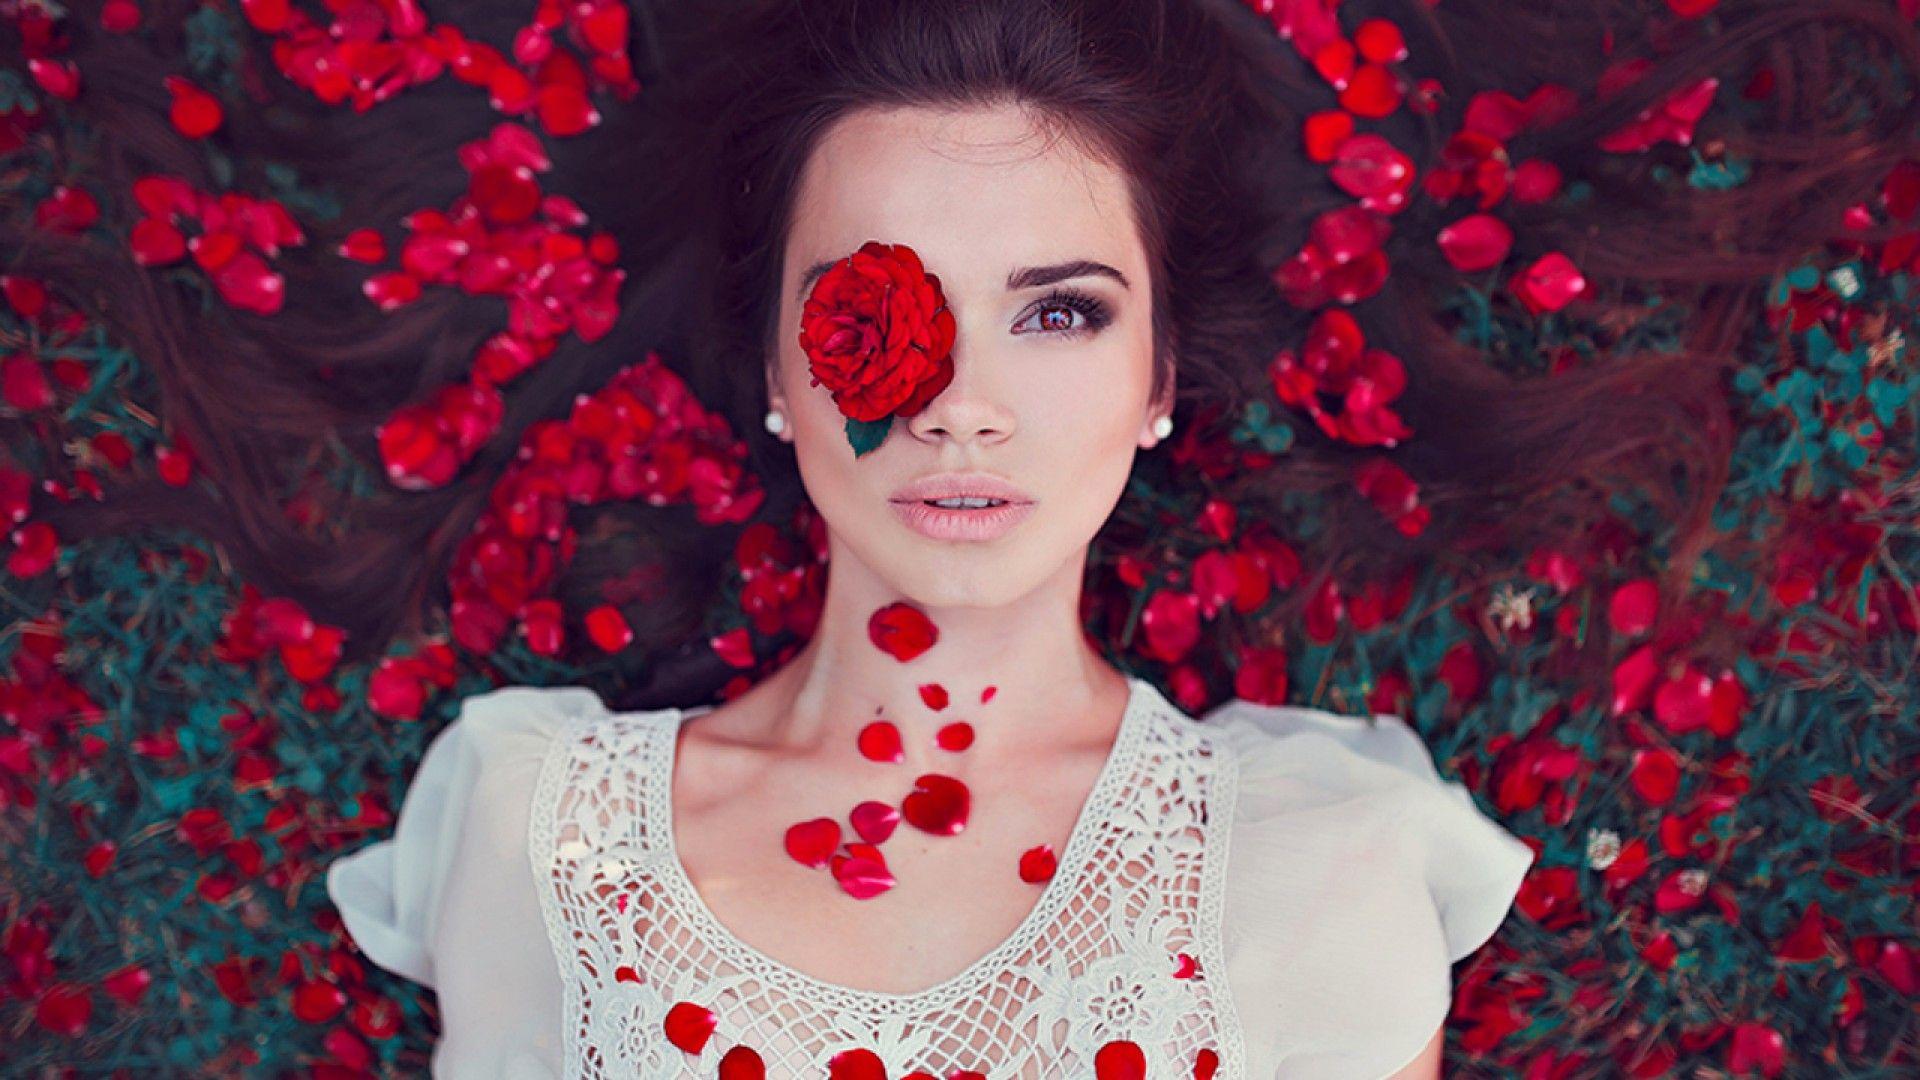 Simply: Beauty roses girl face beautiful woman flowers